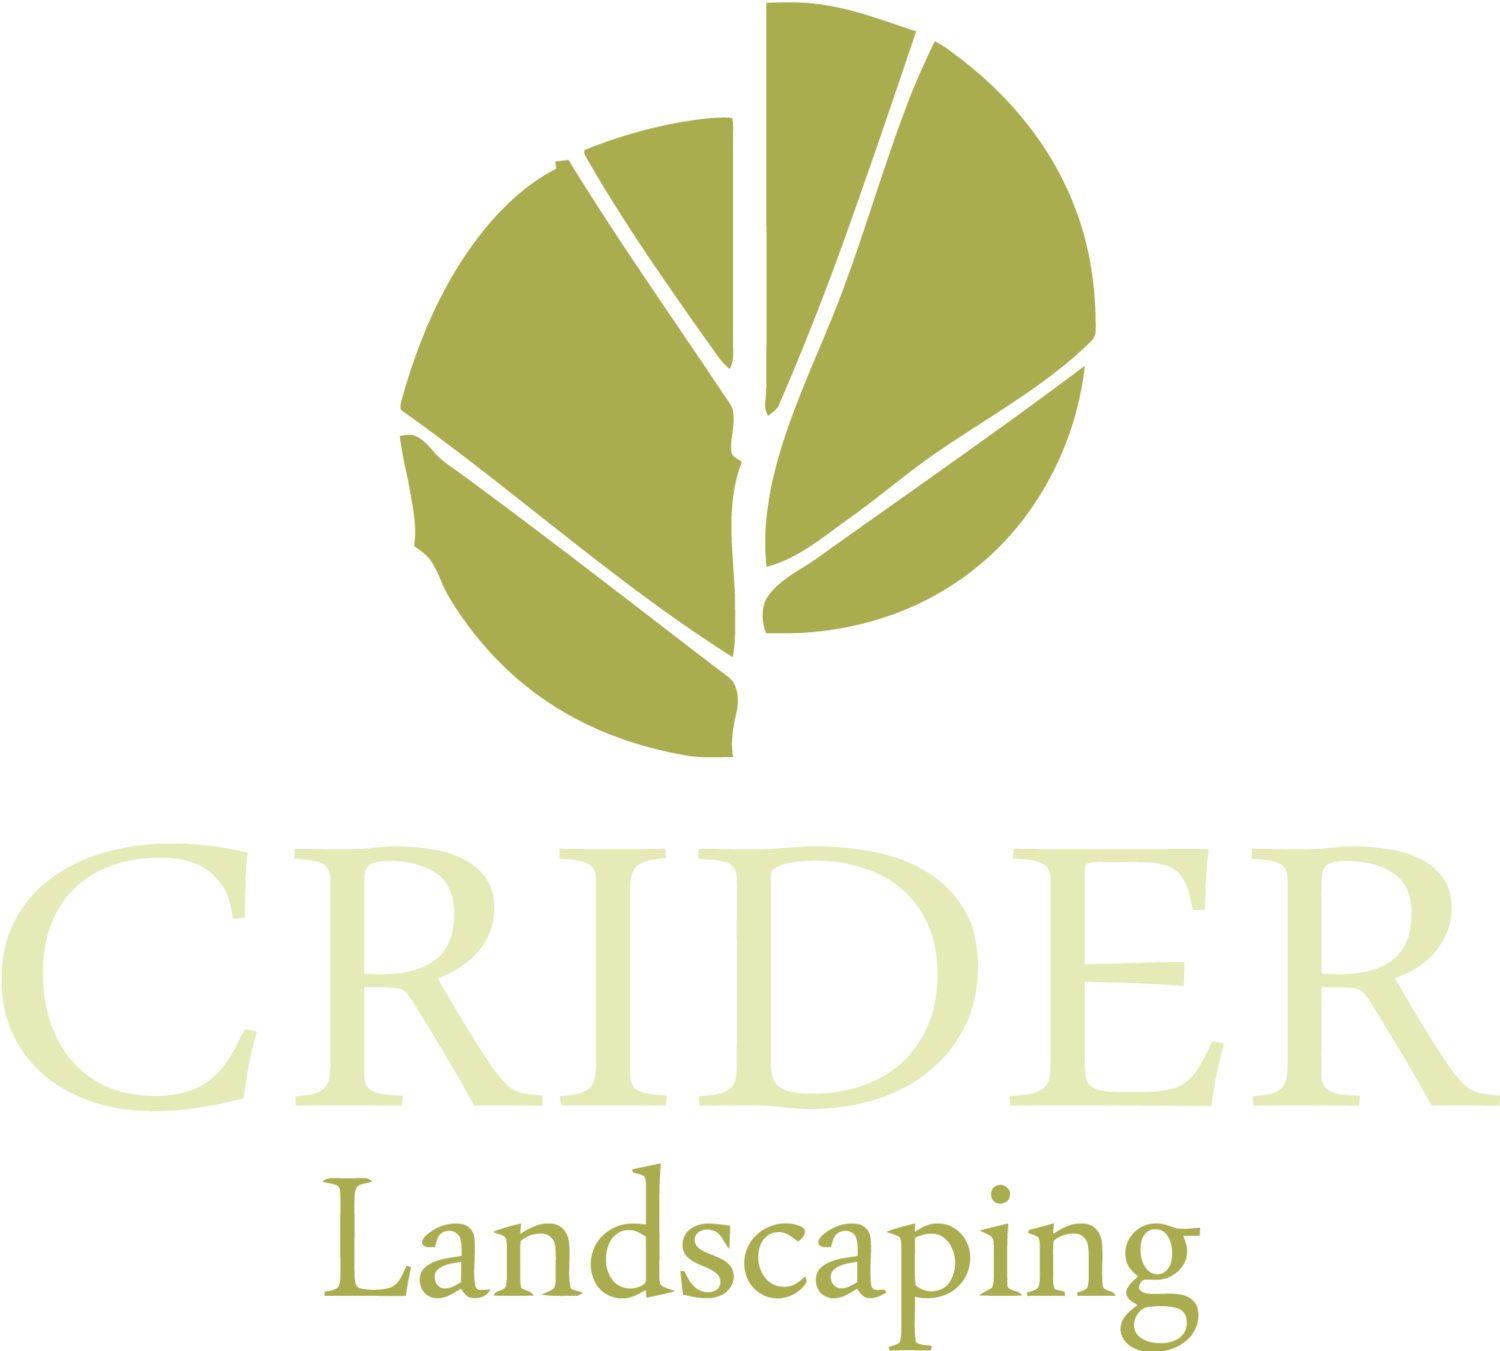 Crider Landscaping